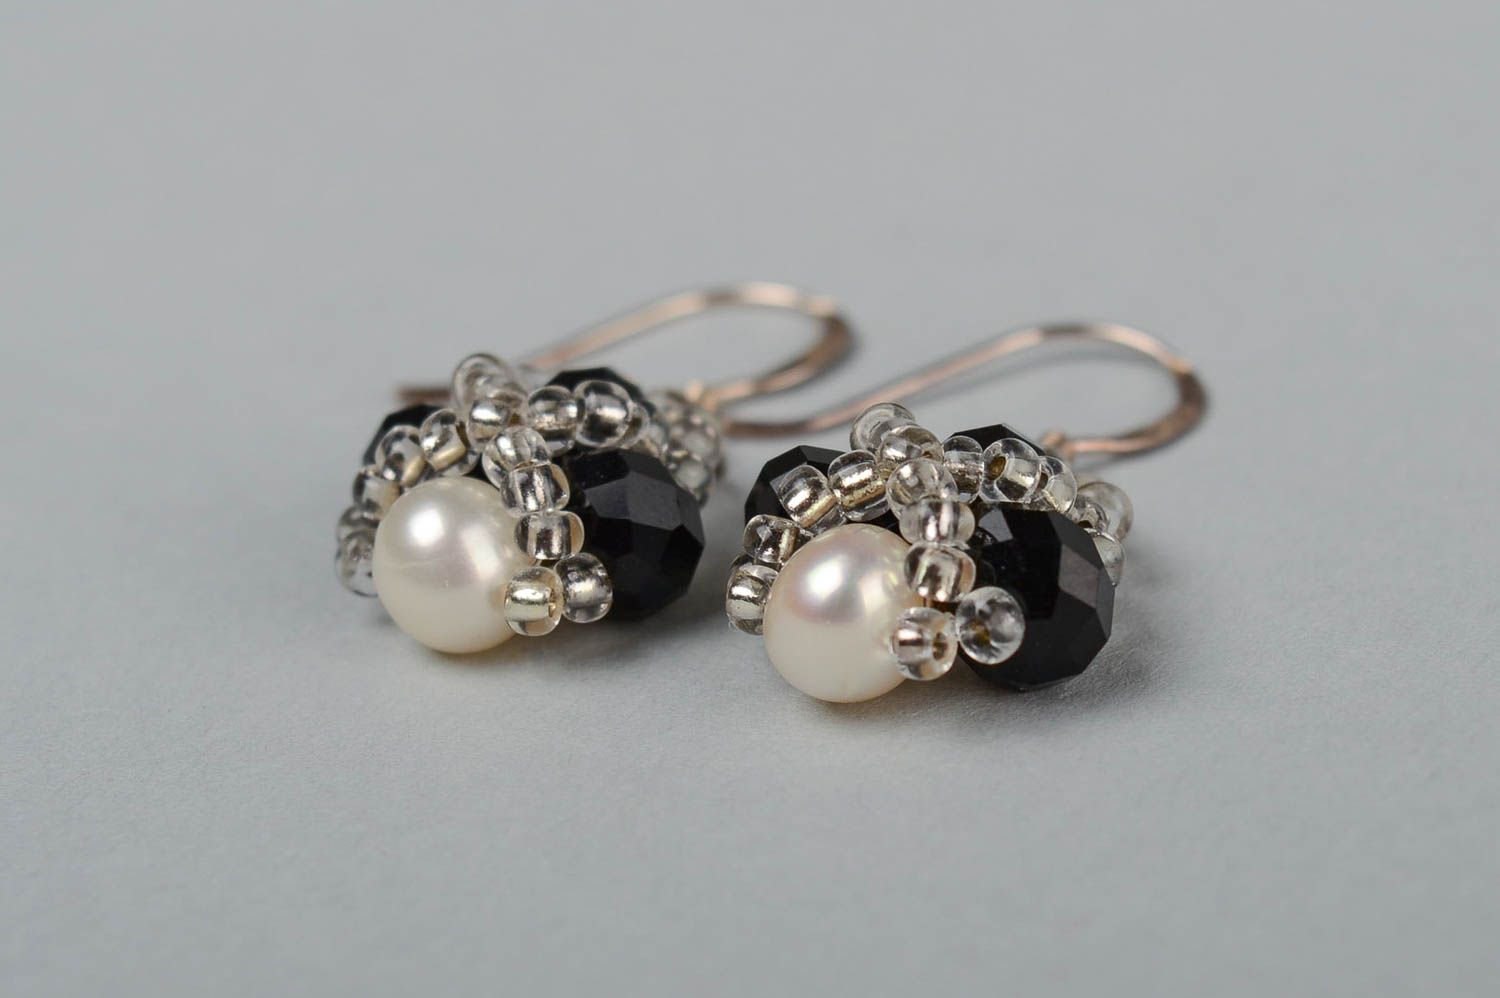 Handmade women earrings with charms pearl earrings evening earrings for girls photo 2